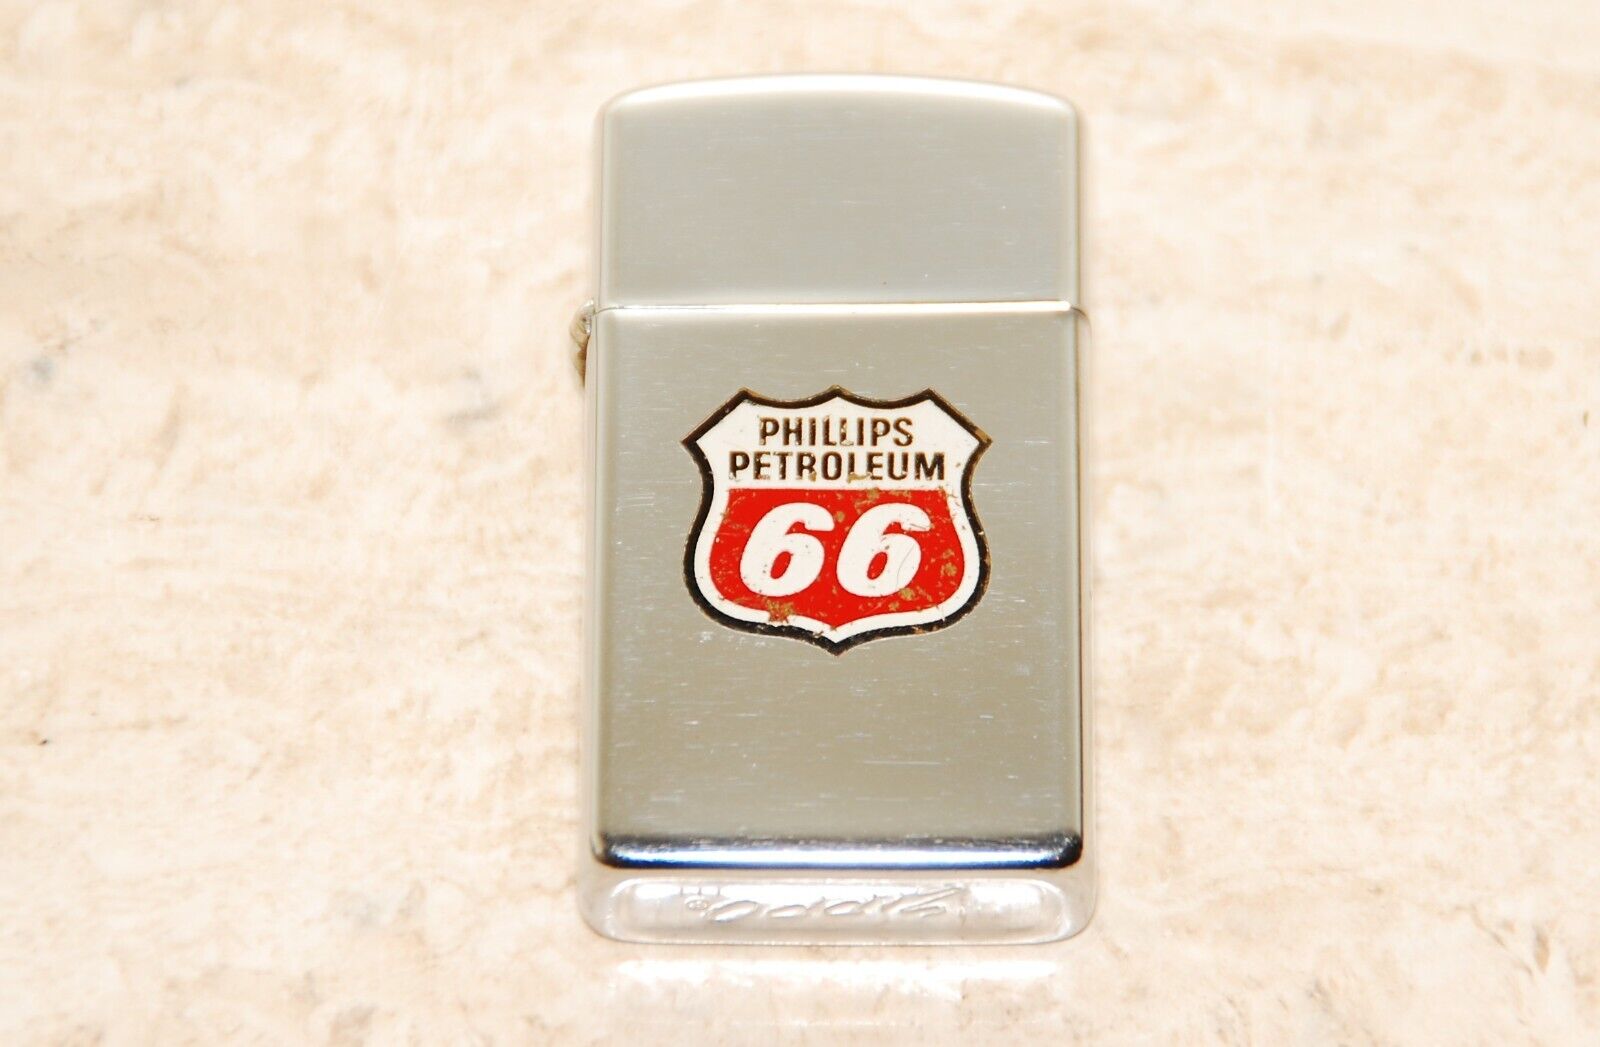 1968 Slim Zippo Lighter - Phillips 66 Petroleum - Gas & Oil